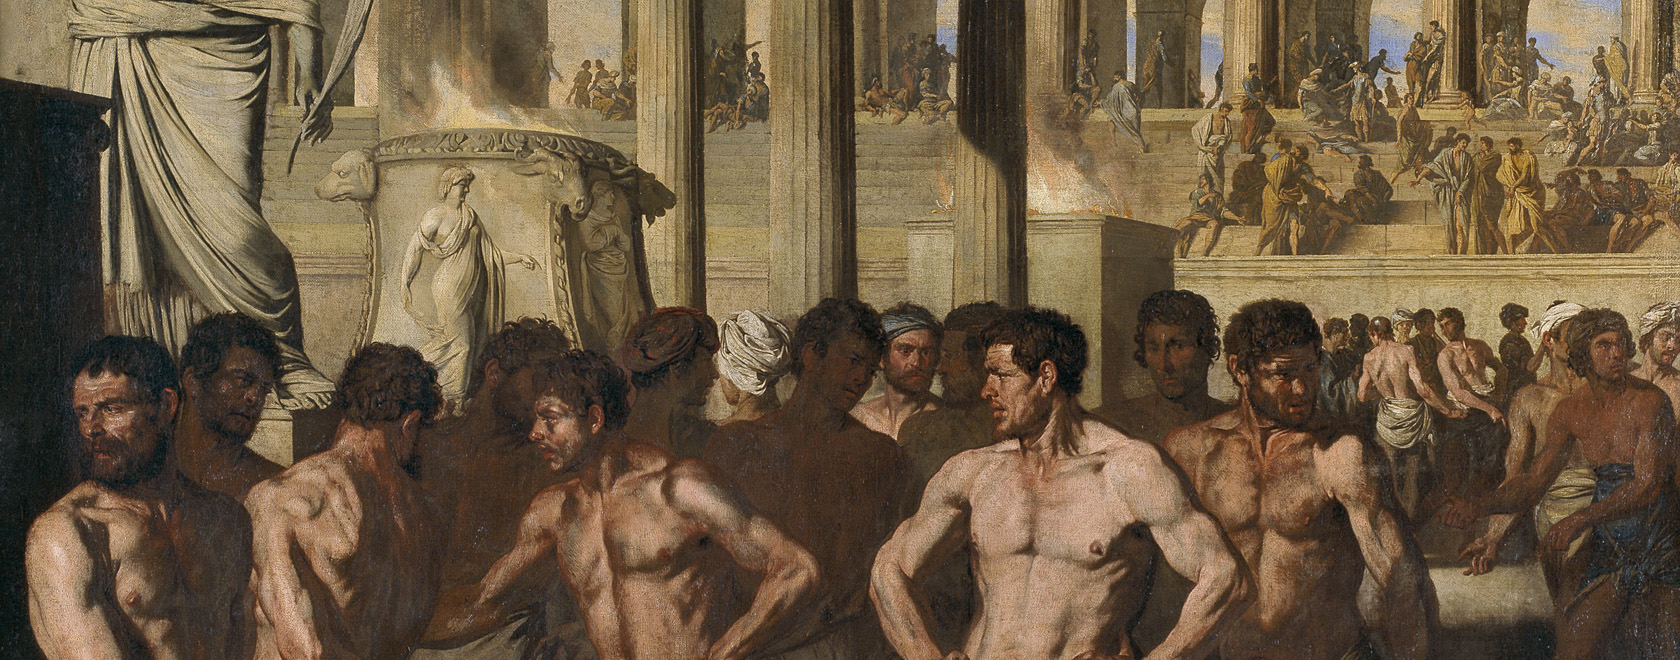 Falcone Aniello, Les Gladiateurs, vers 1637-1637, huile sur toile, 186 x 183 cm, Madrid, Musée du Prado (détail). Photo © Museo Nacional del Prado / Dist. RMN-Grand Palais/image du Prado